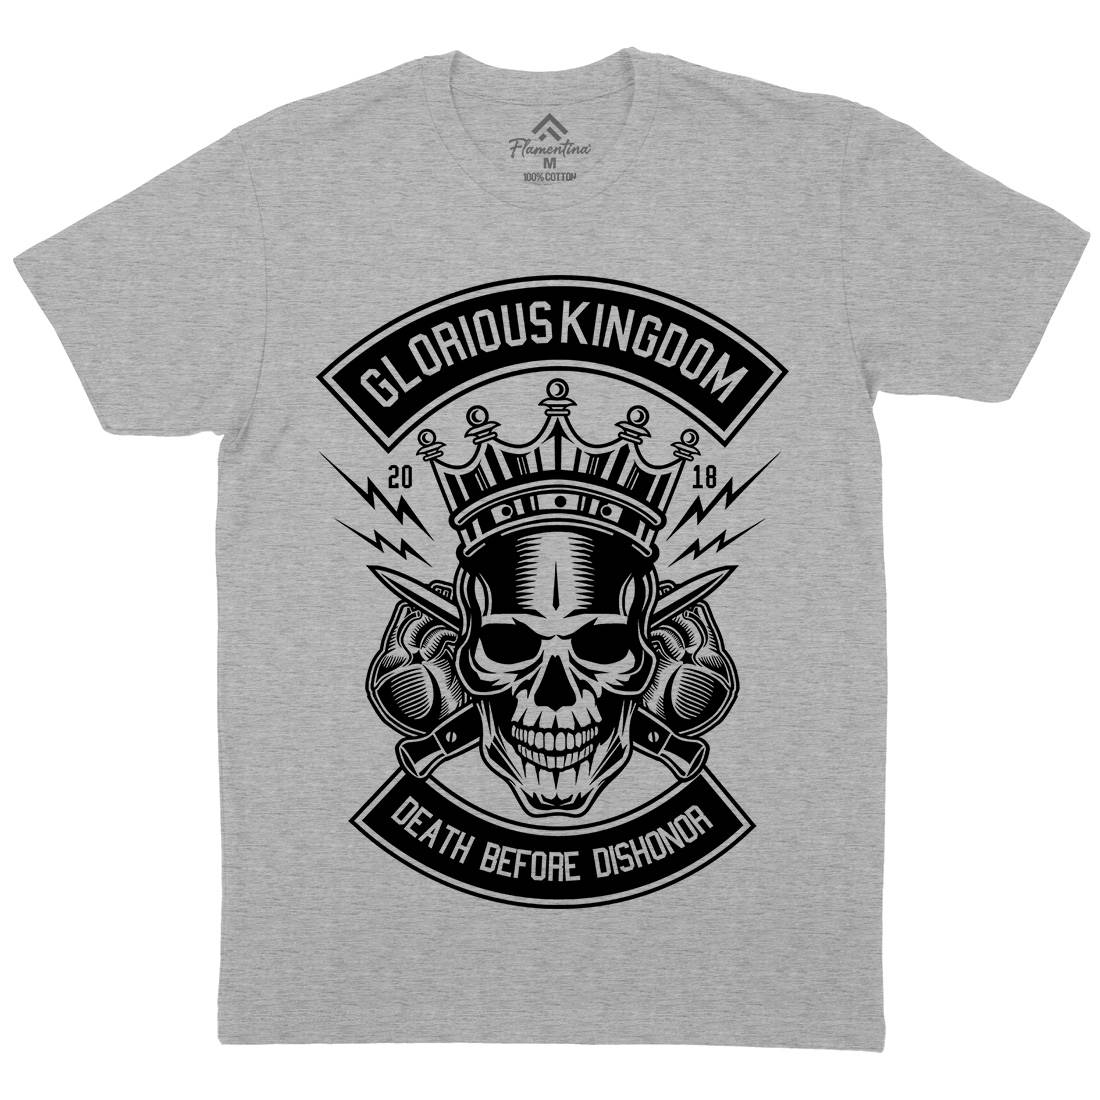 Glorious Kingdom Mens Crew Neck T-Shirt Retro B546